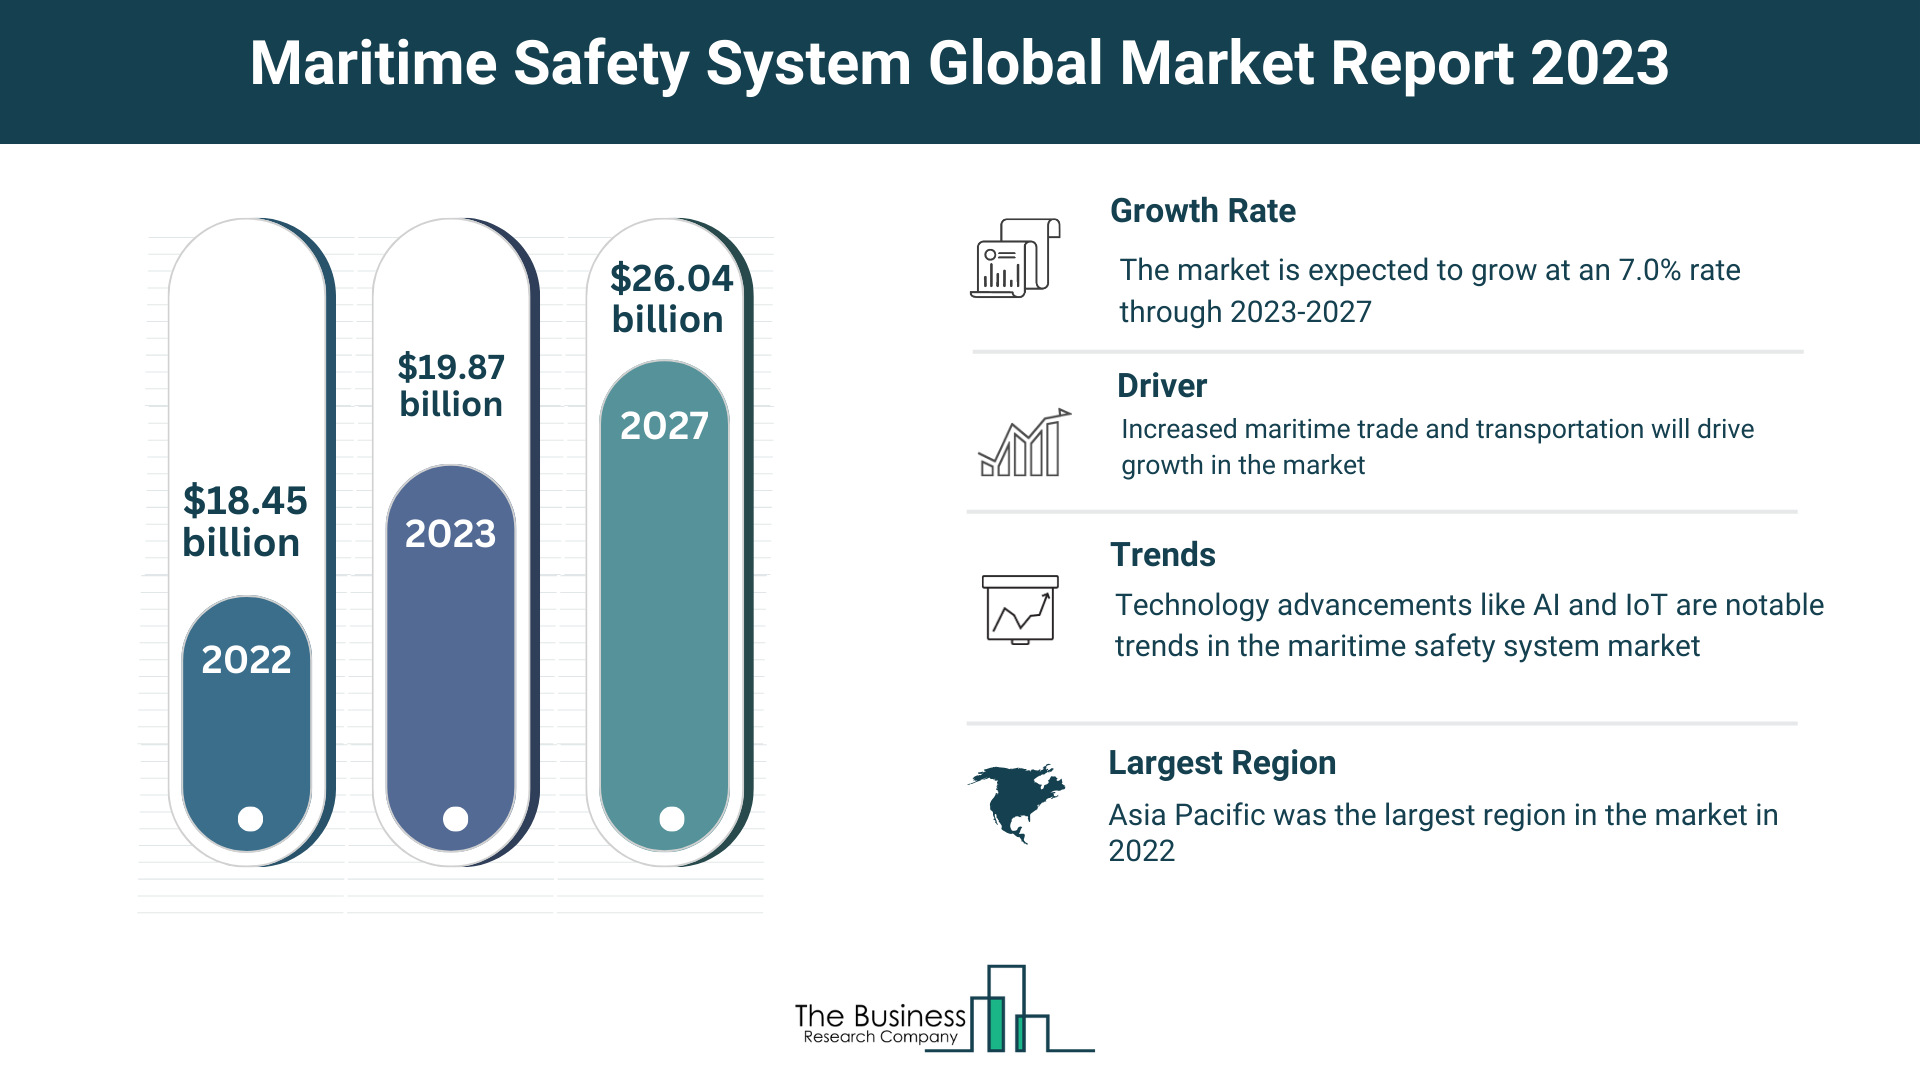 Global Maritime Safety System Market